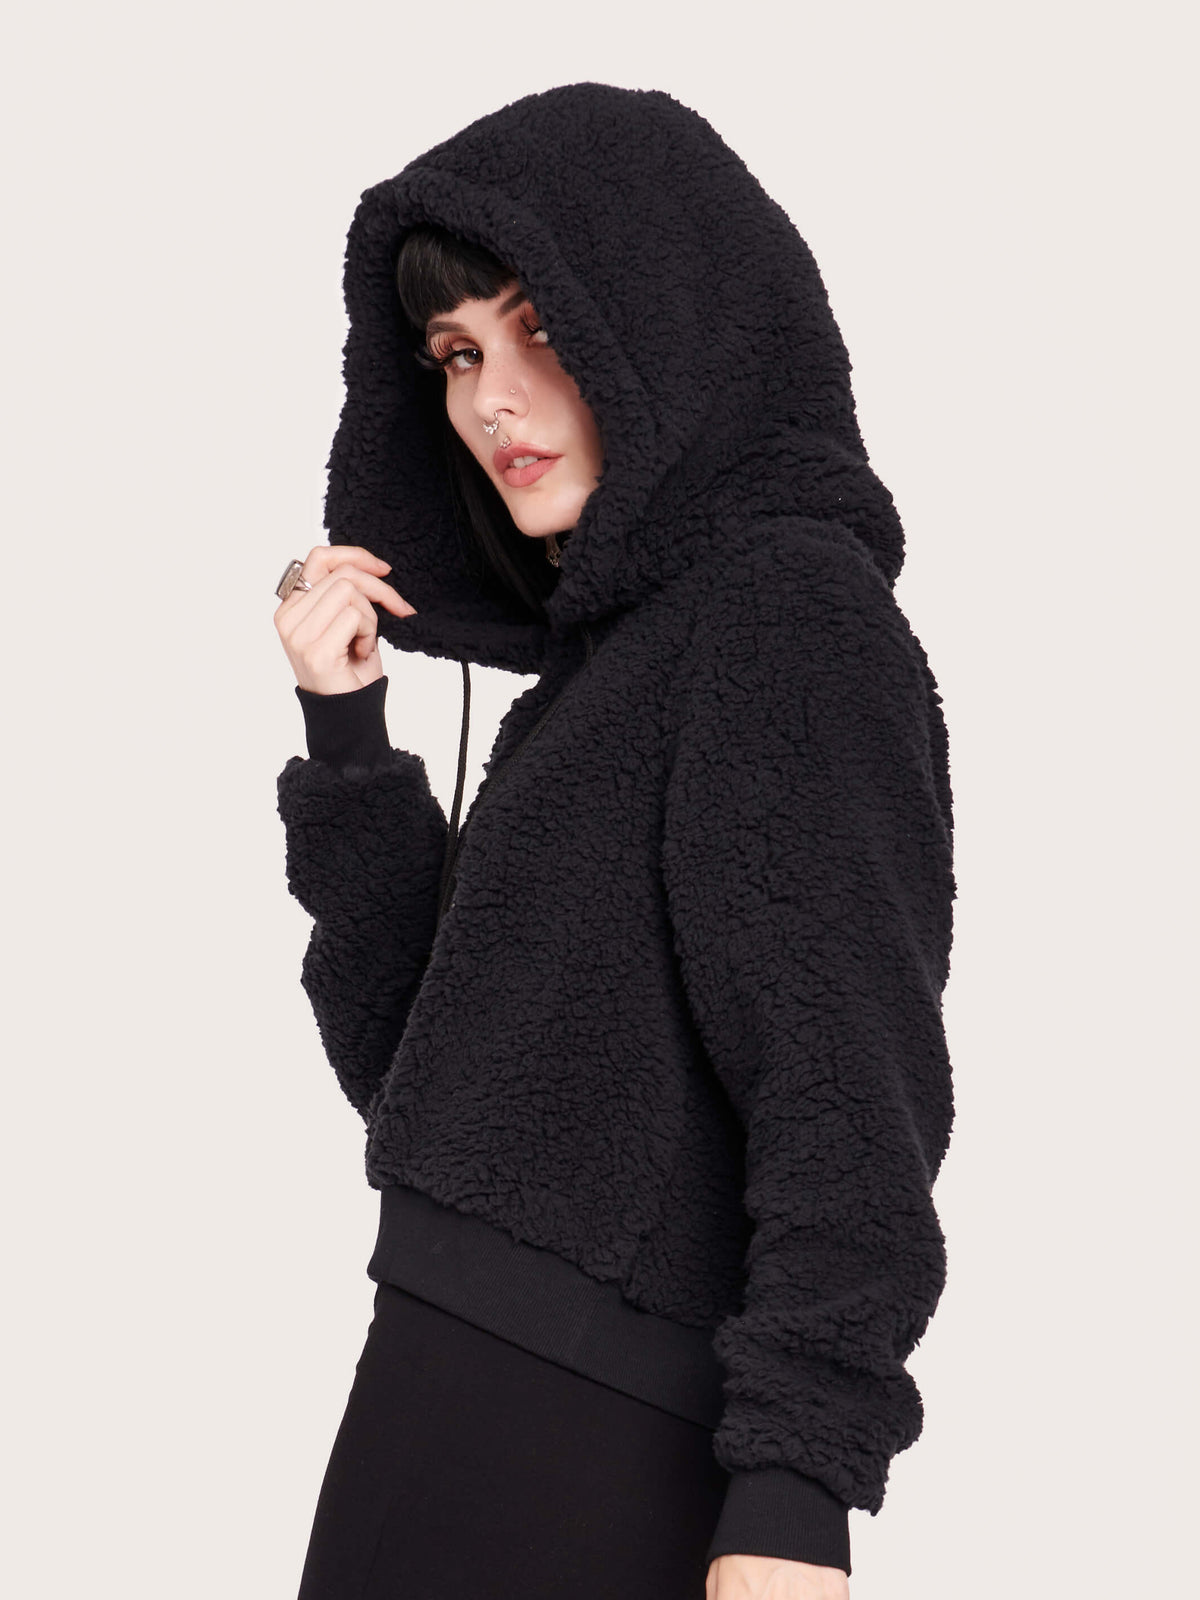 Planchette cropped sherpa hoodie. voodoo, goth girl, nu goth, gothic outfits, dark aesthetic, alt fashion, dark fashion